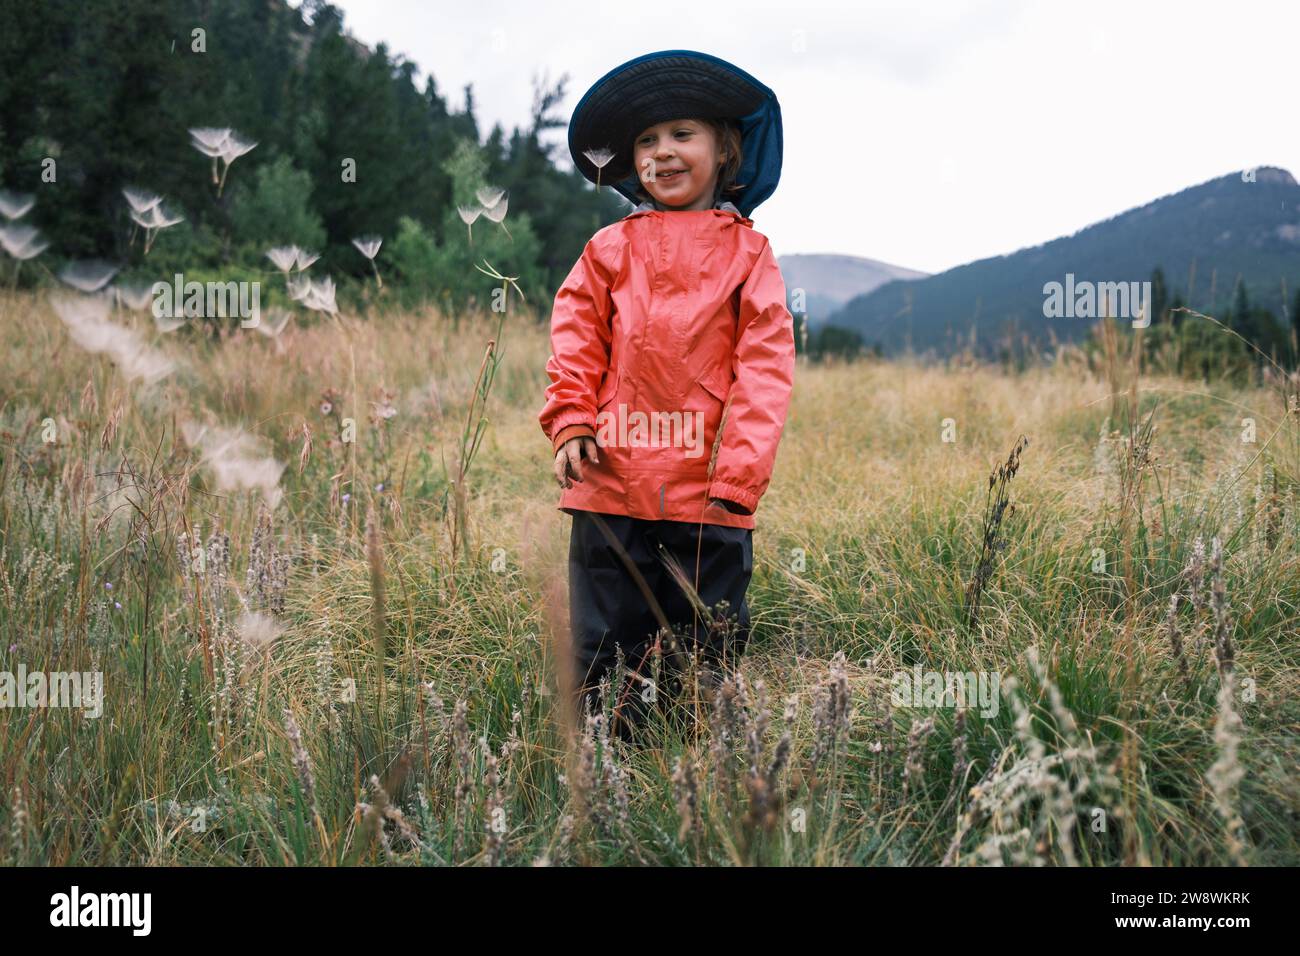 Girl enjoying nature in the mountains of Colorado Stock Photo